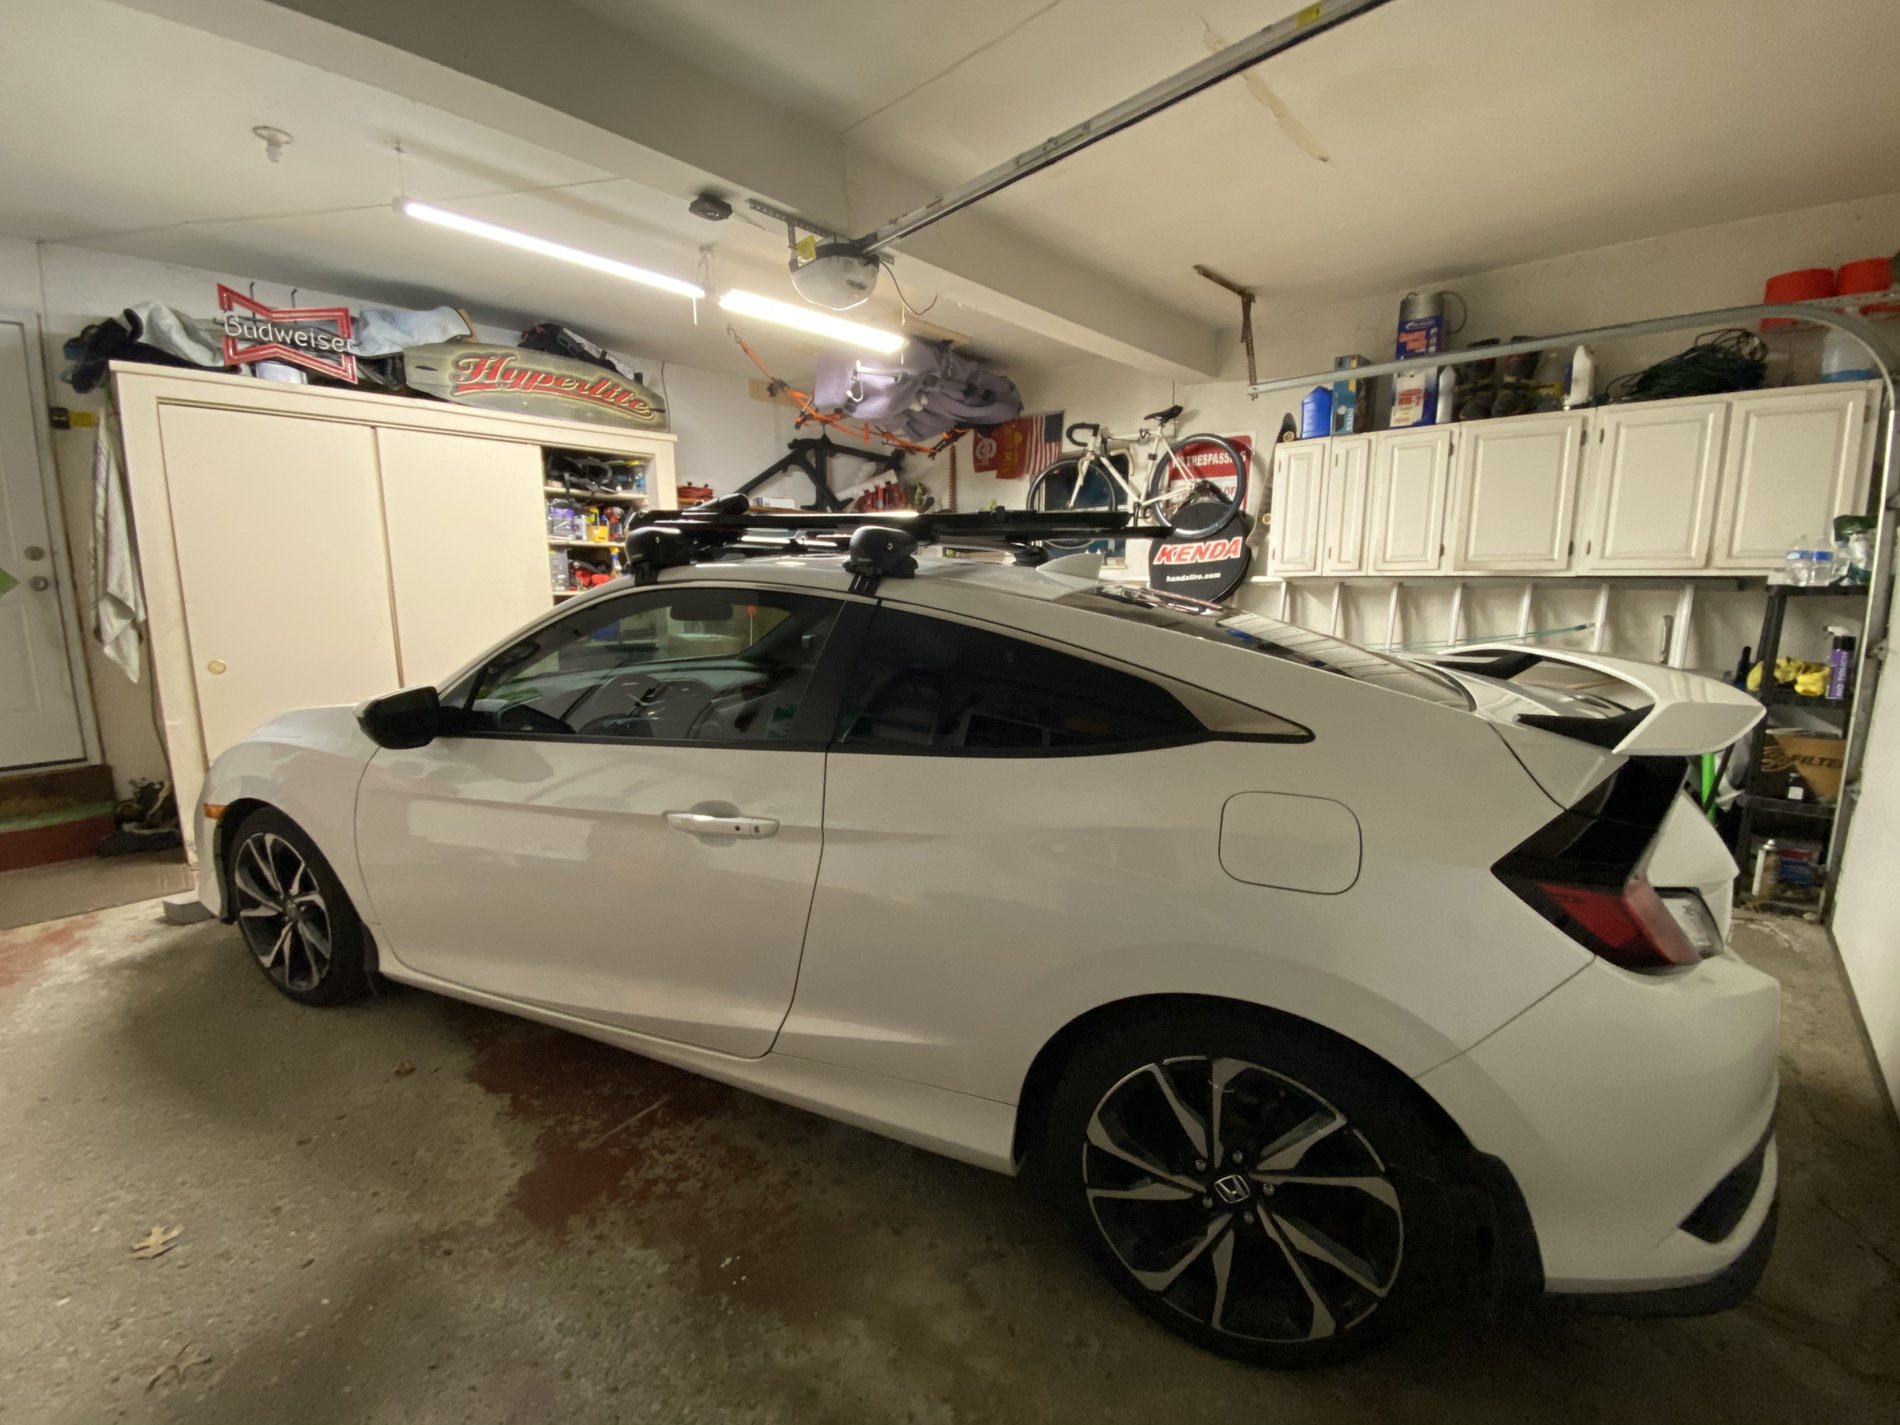 Honda Civic Coupe Roof Rack